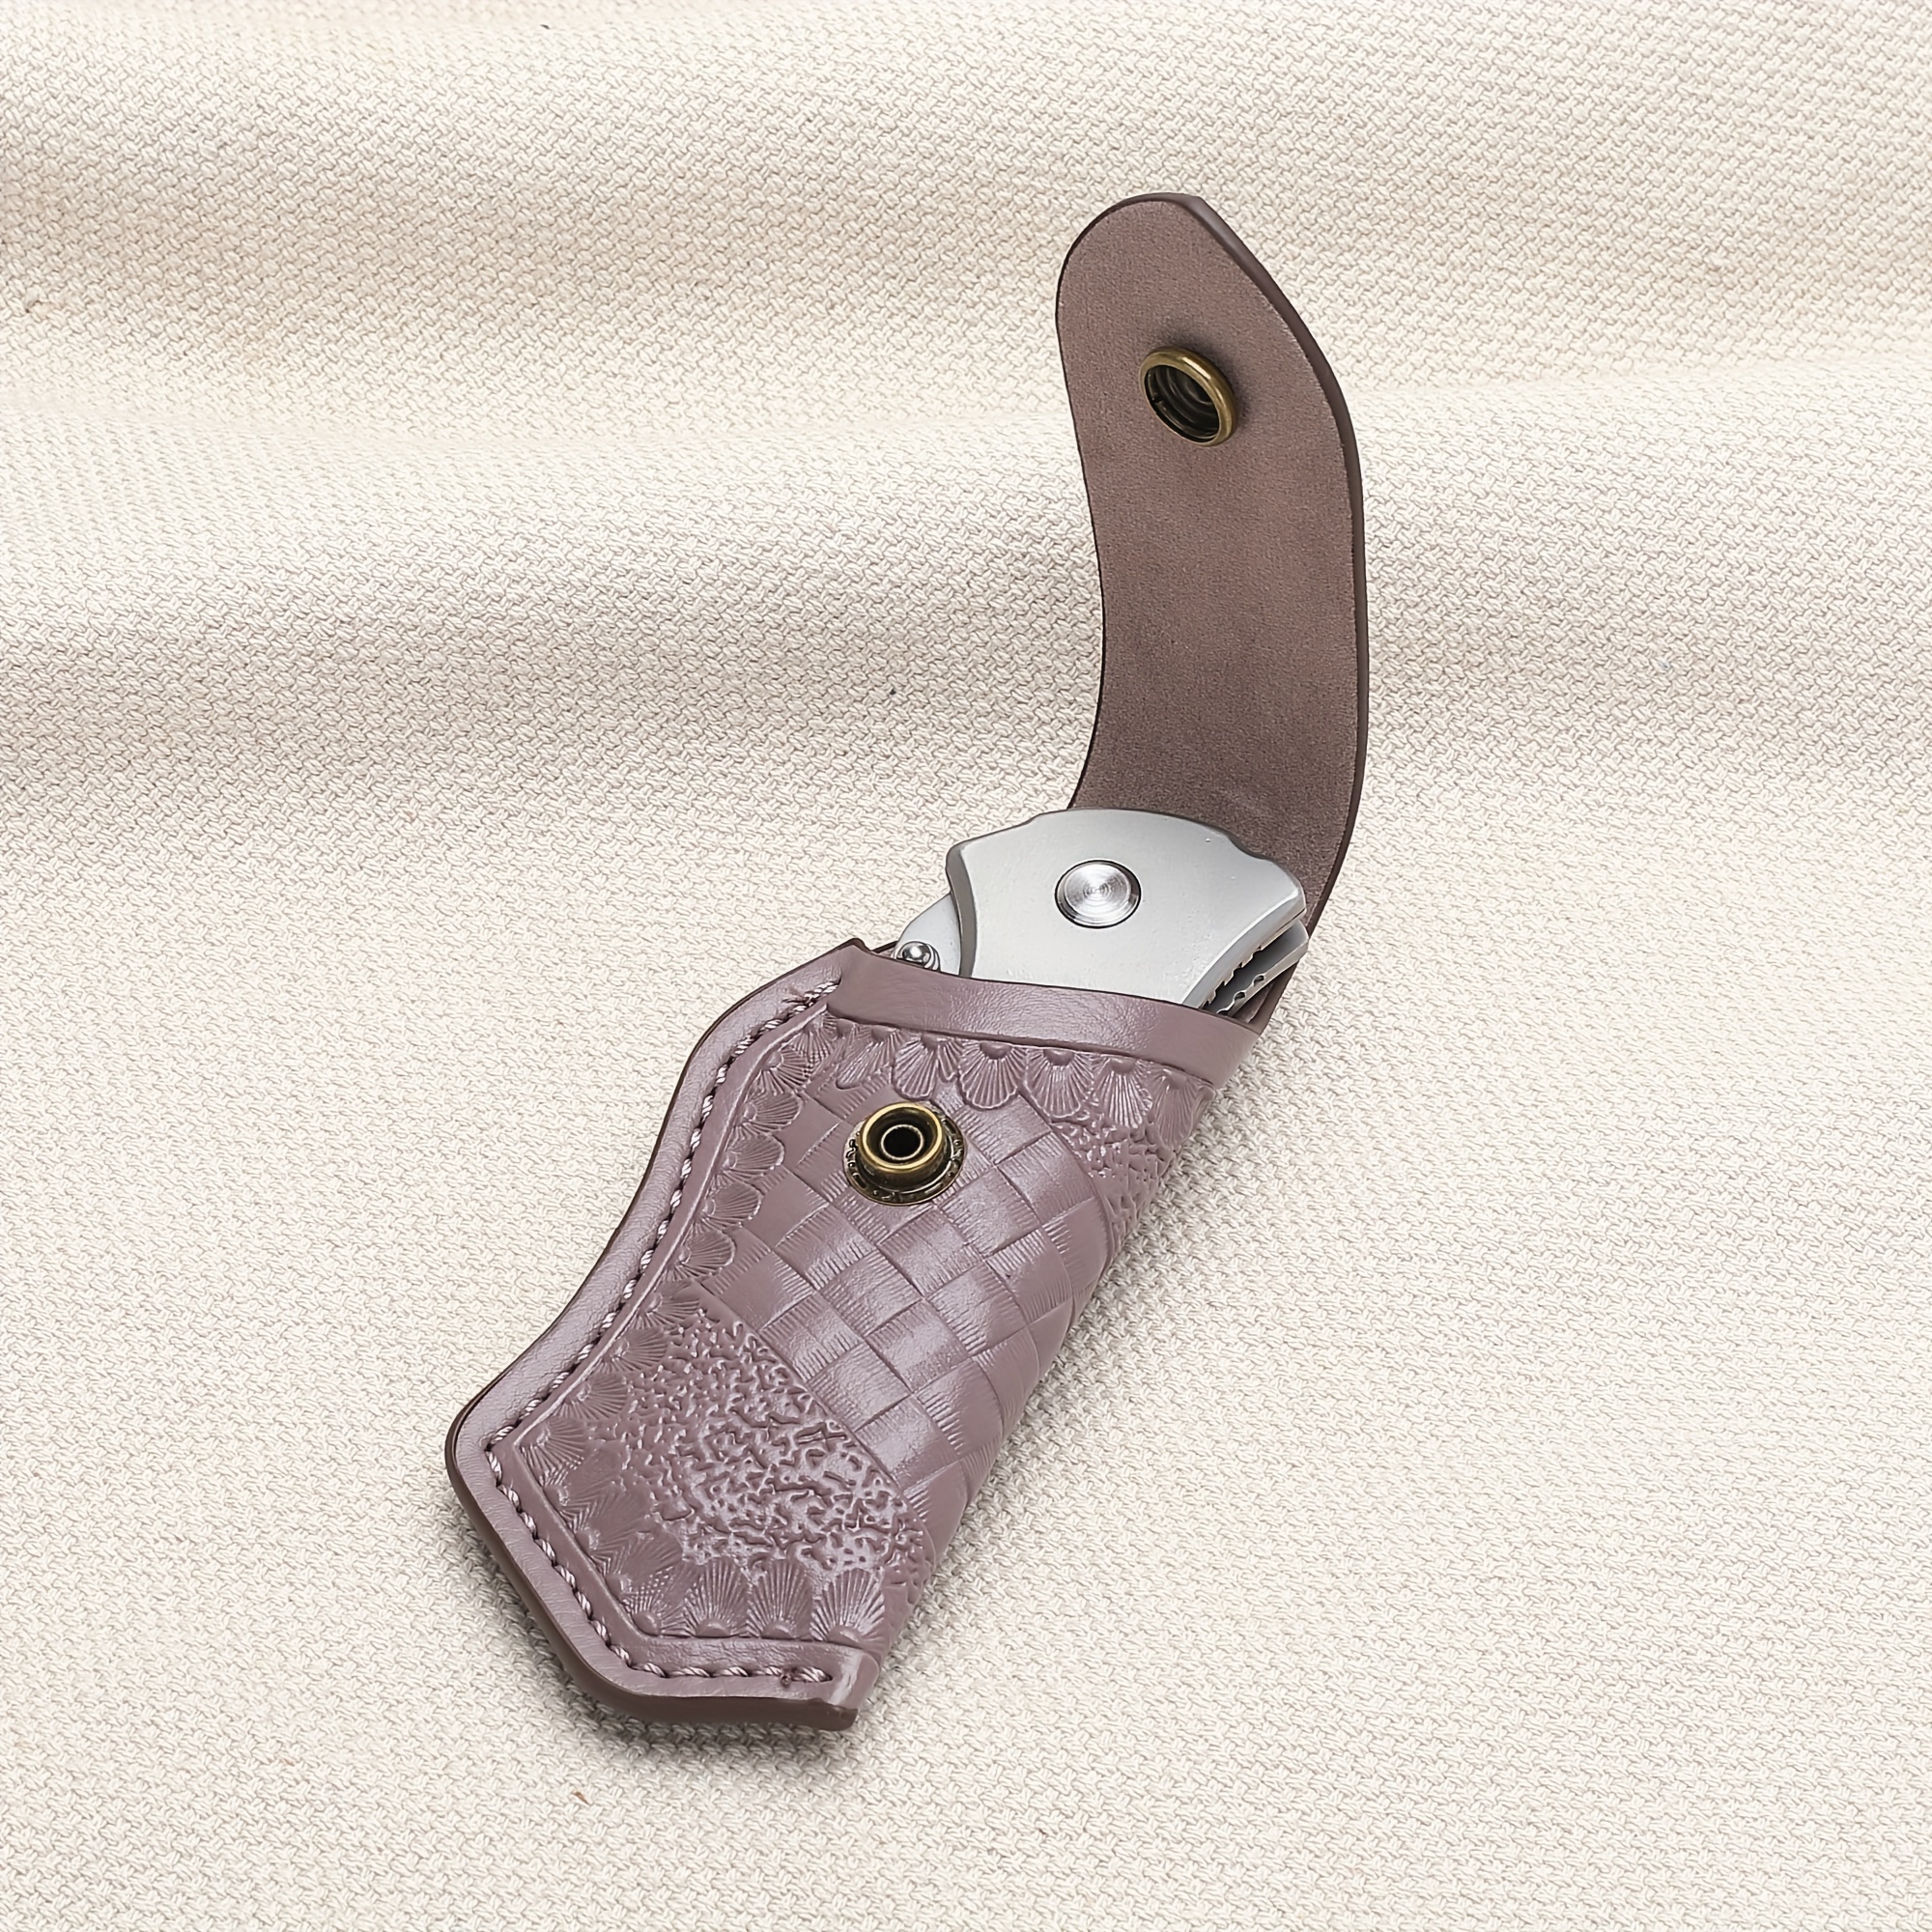 Gentlestache belt Knife Sheath, Knife Holster, Horizontal Knife Sheath for  belt EDC Knife Holster belt, Compact Draw Knife Holster : : Home  Improvement